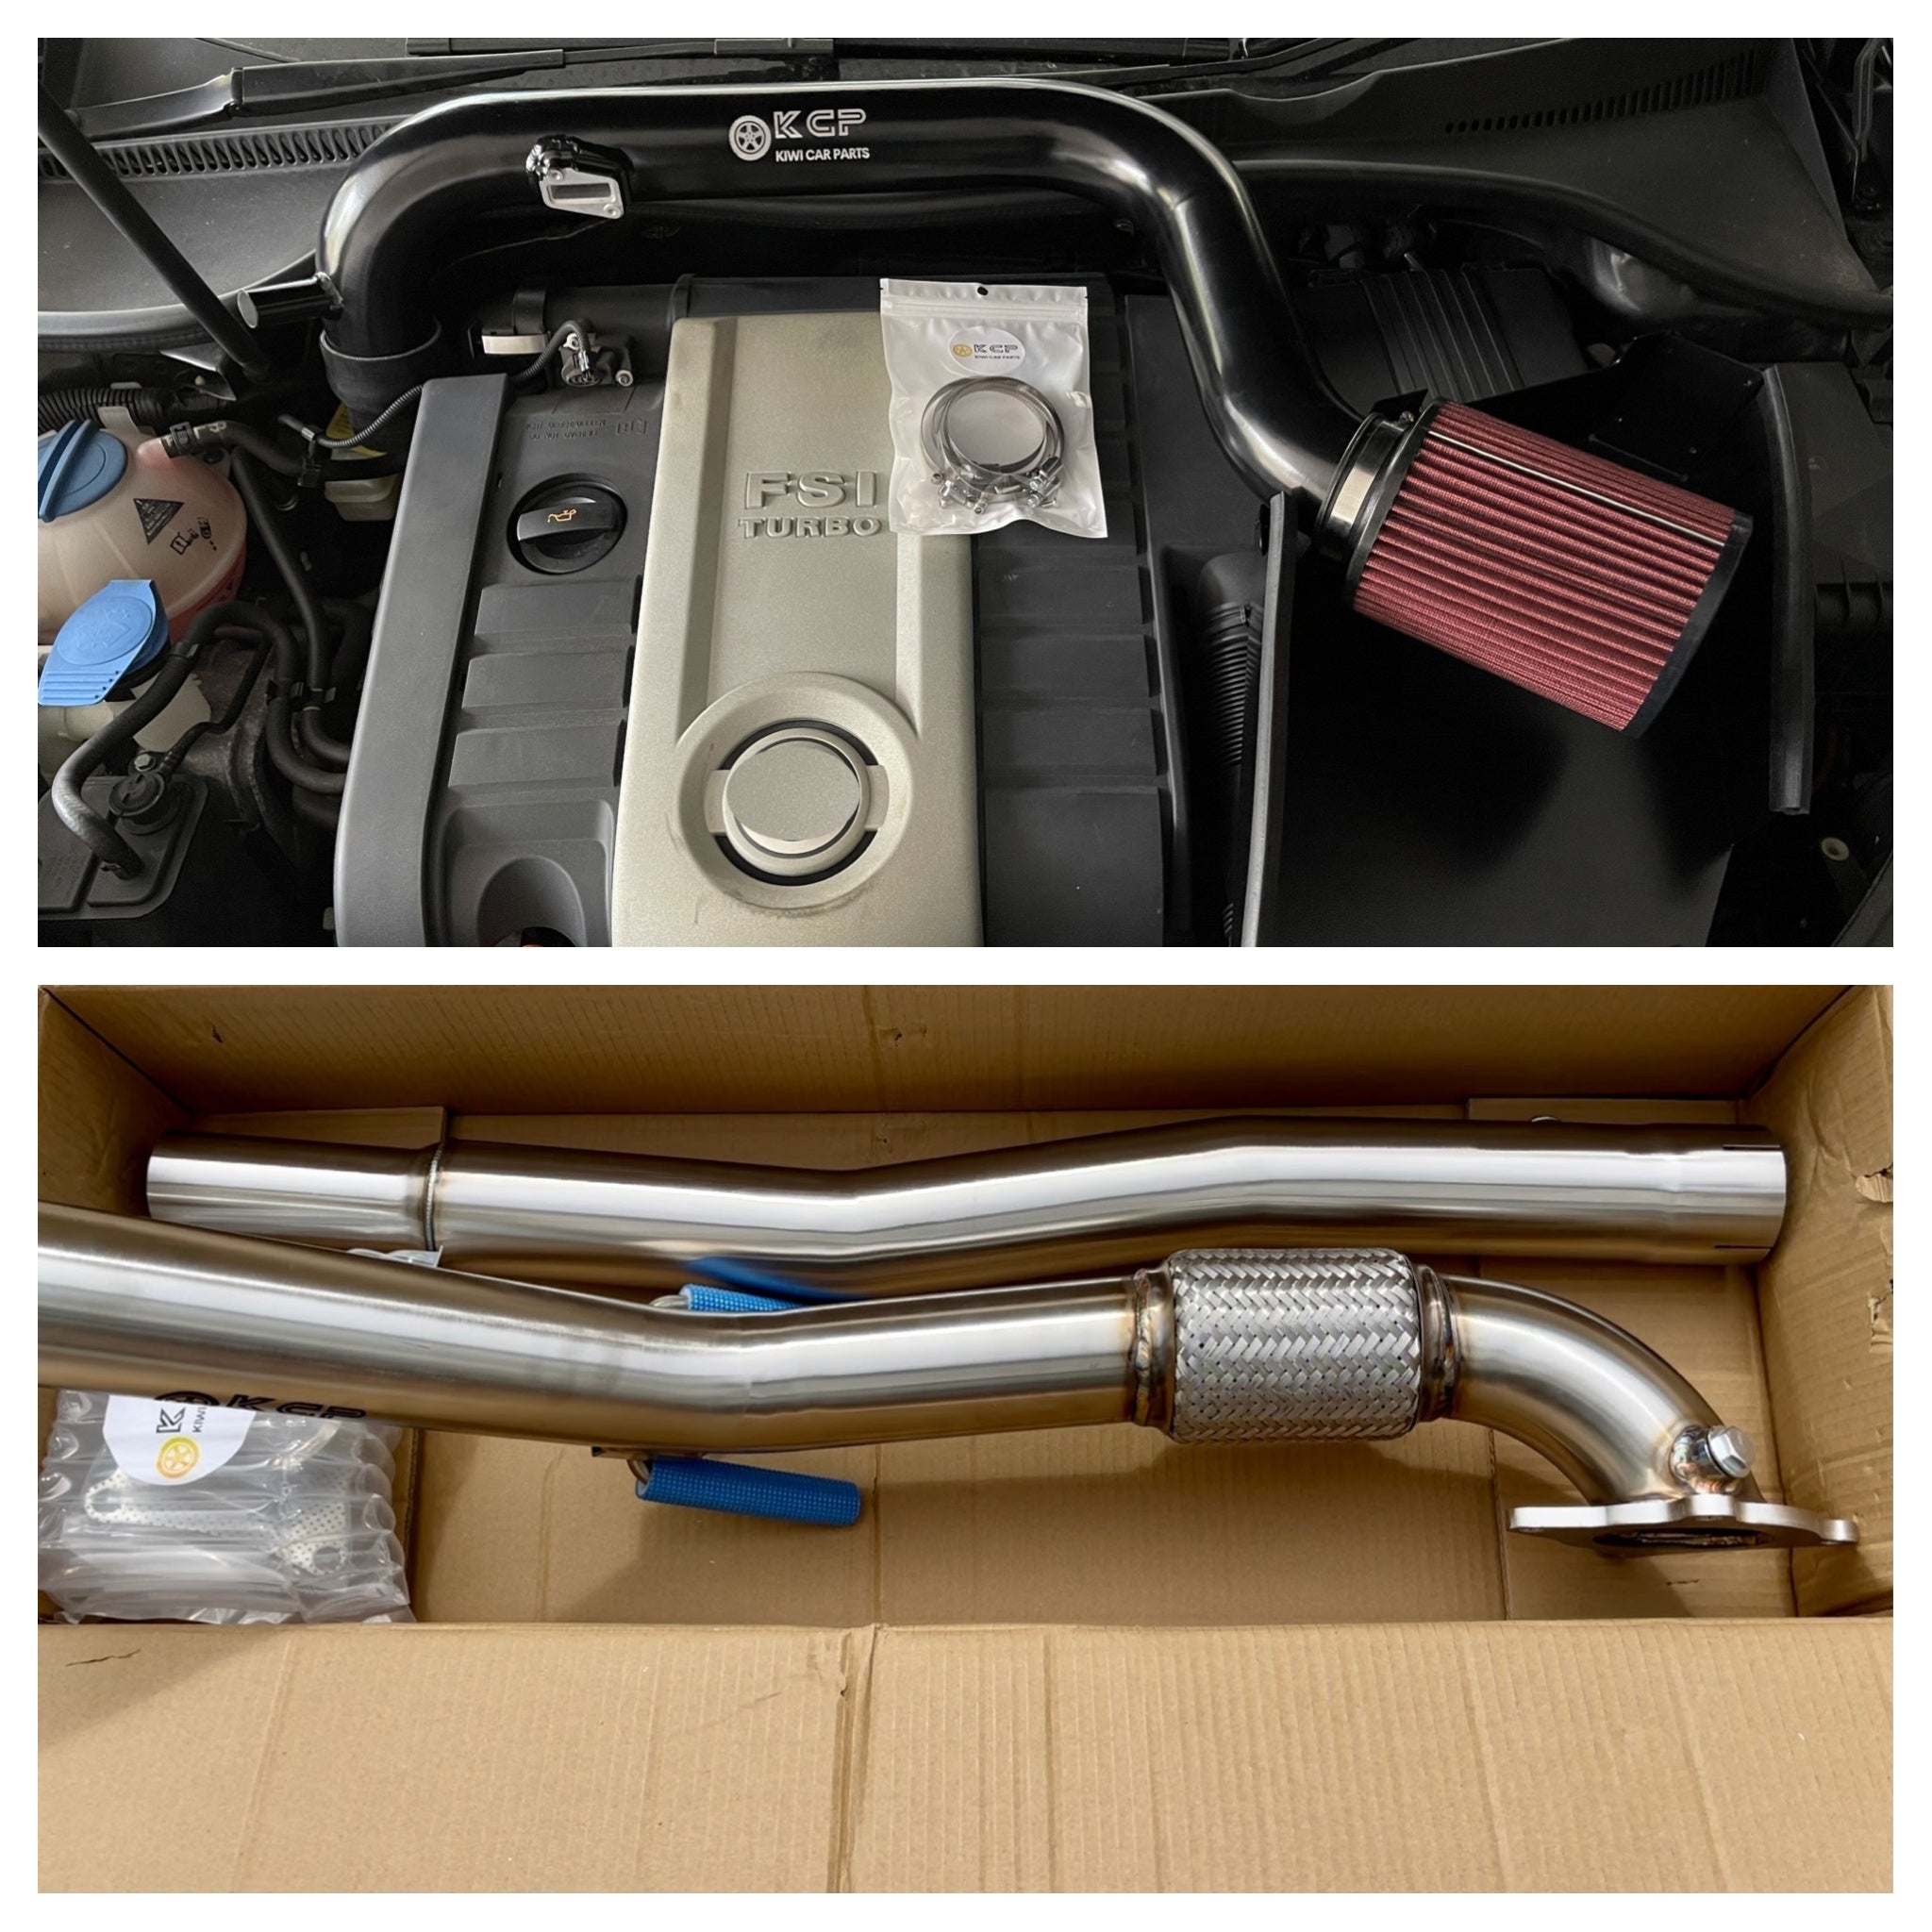 Cold Air Intake Kit for VW Golf MK5 Combo Deal Cold Air Intake Kit and Downpipe Set For VW Golf MK5 GTI GTX 2.0T FSI, Audi A3 2.0 TFSI